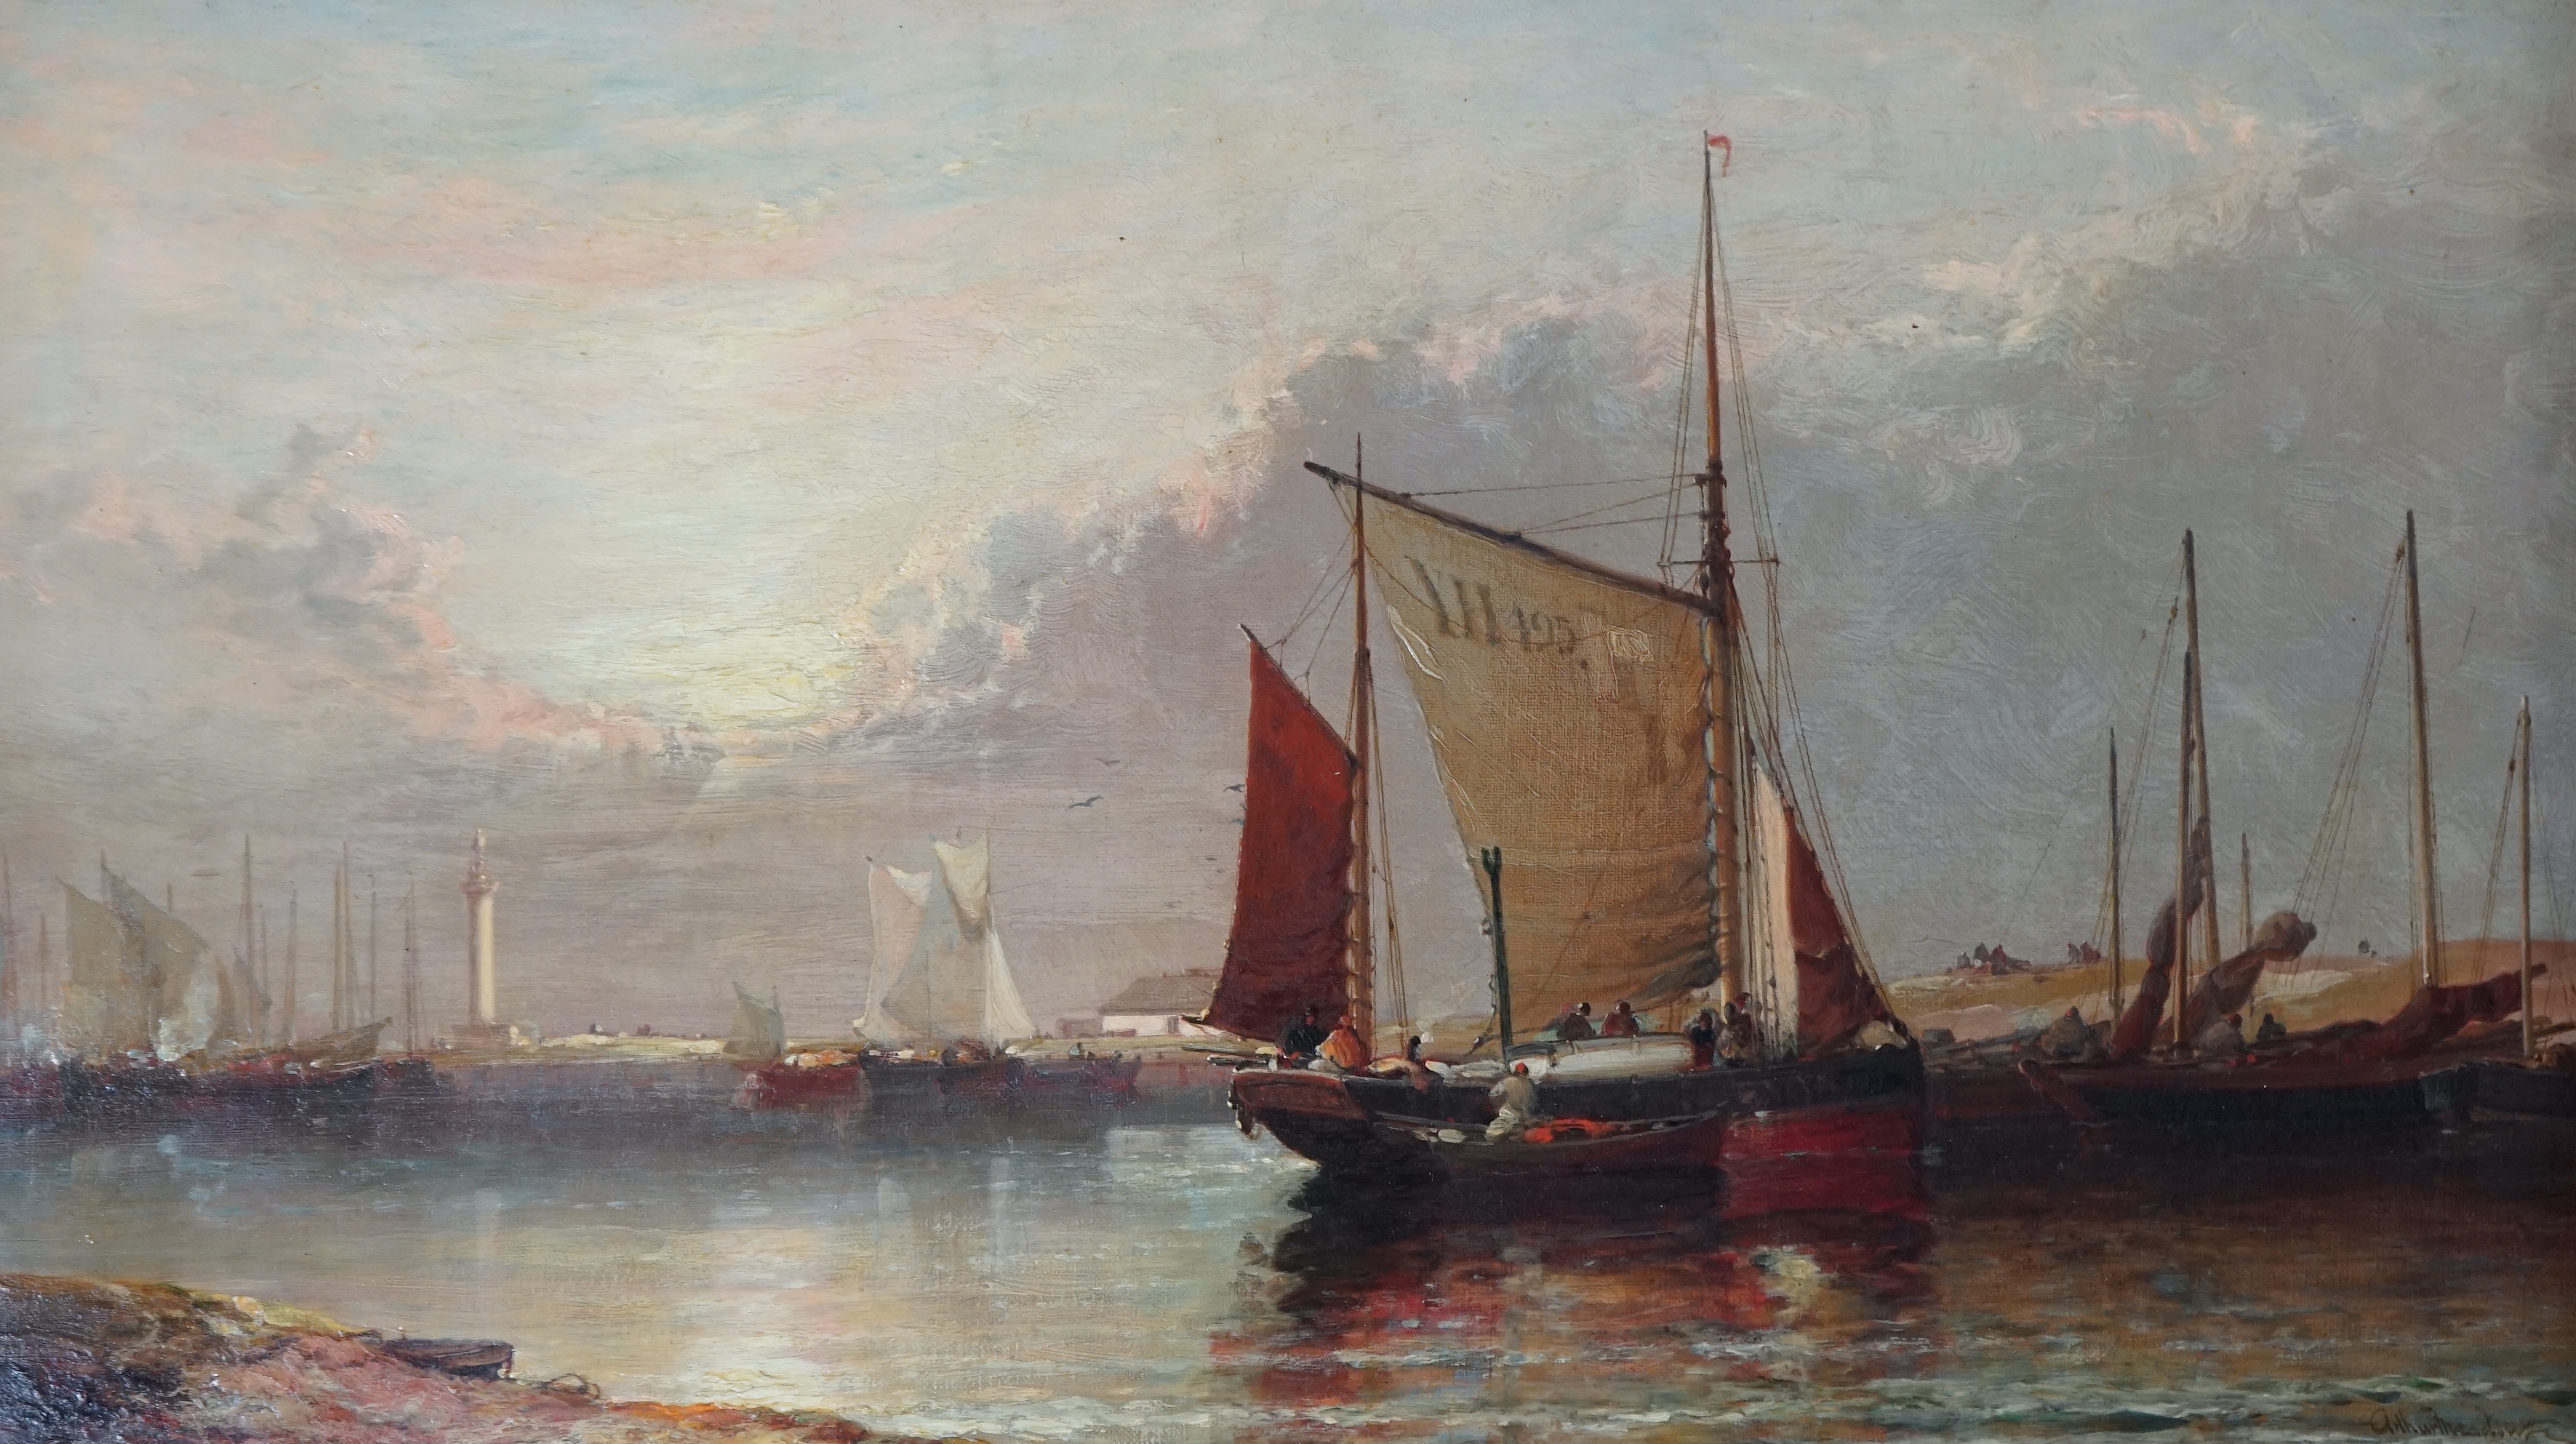 Arthur Joseph Meadows (English, 1843-1907), 'On The Yare - Early Morning', oil on canvas, 34 x 60cm